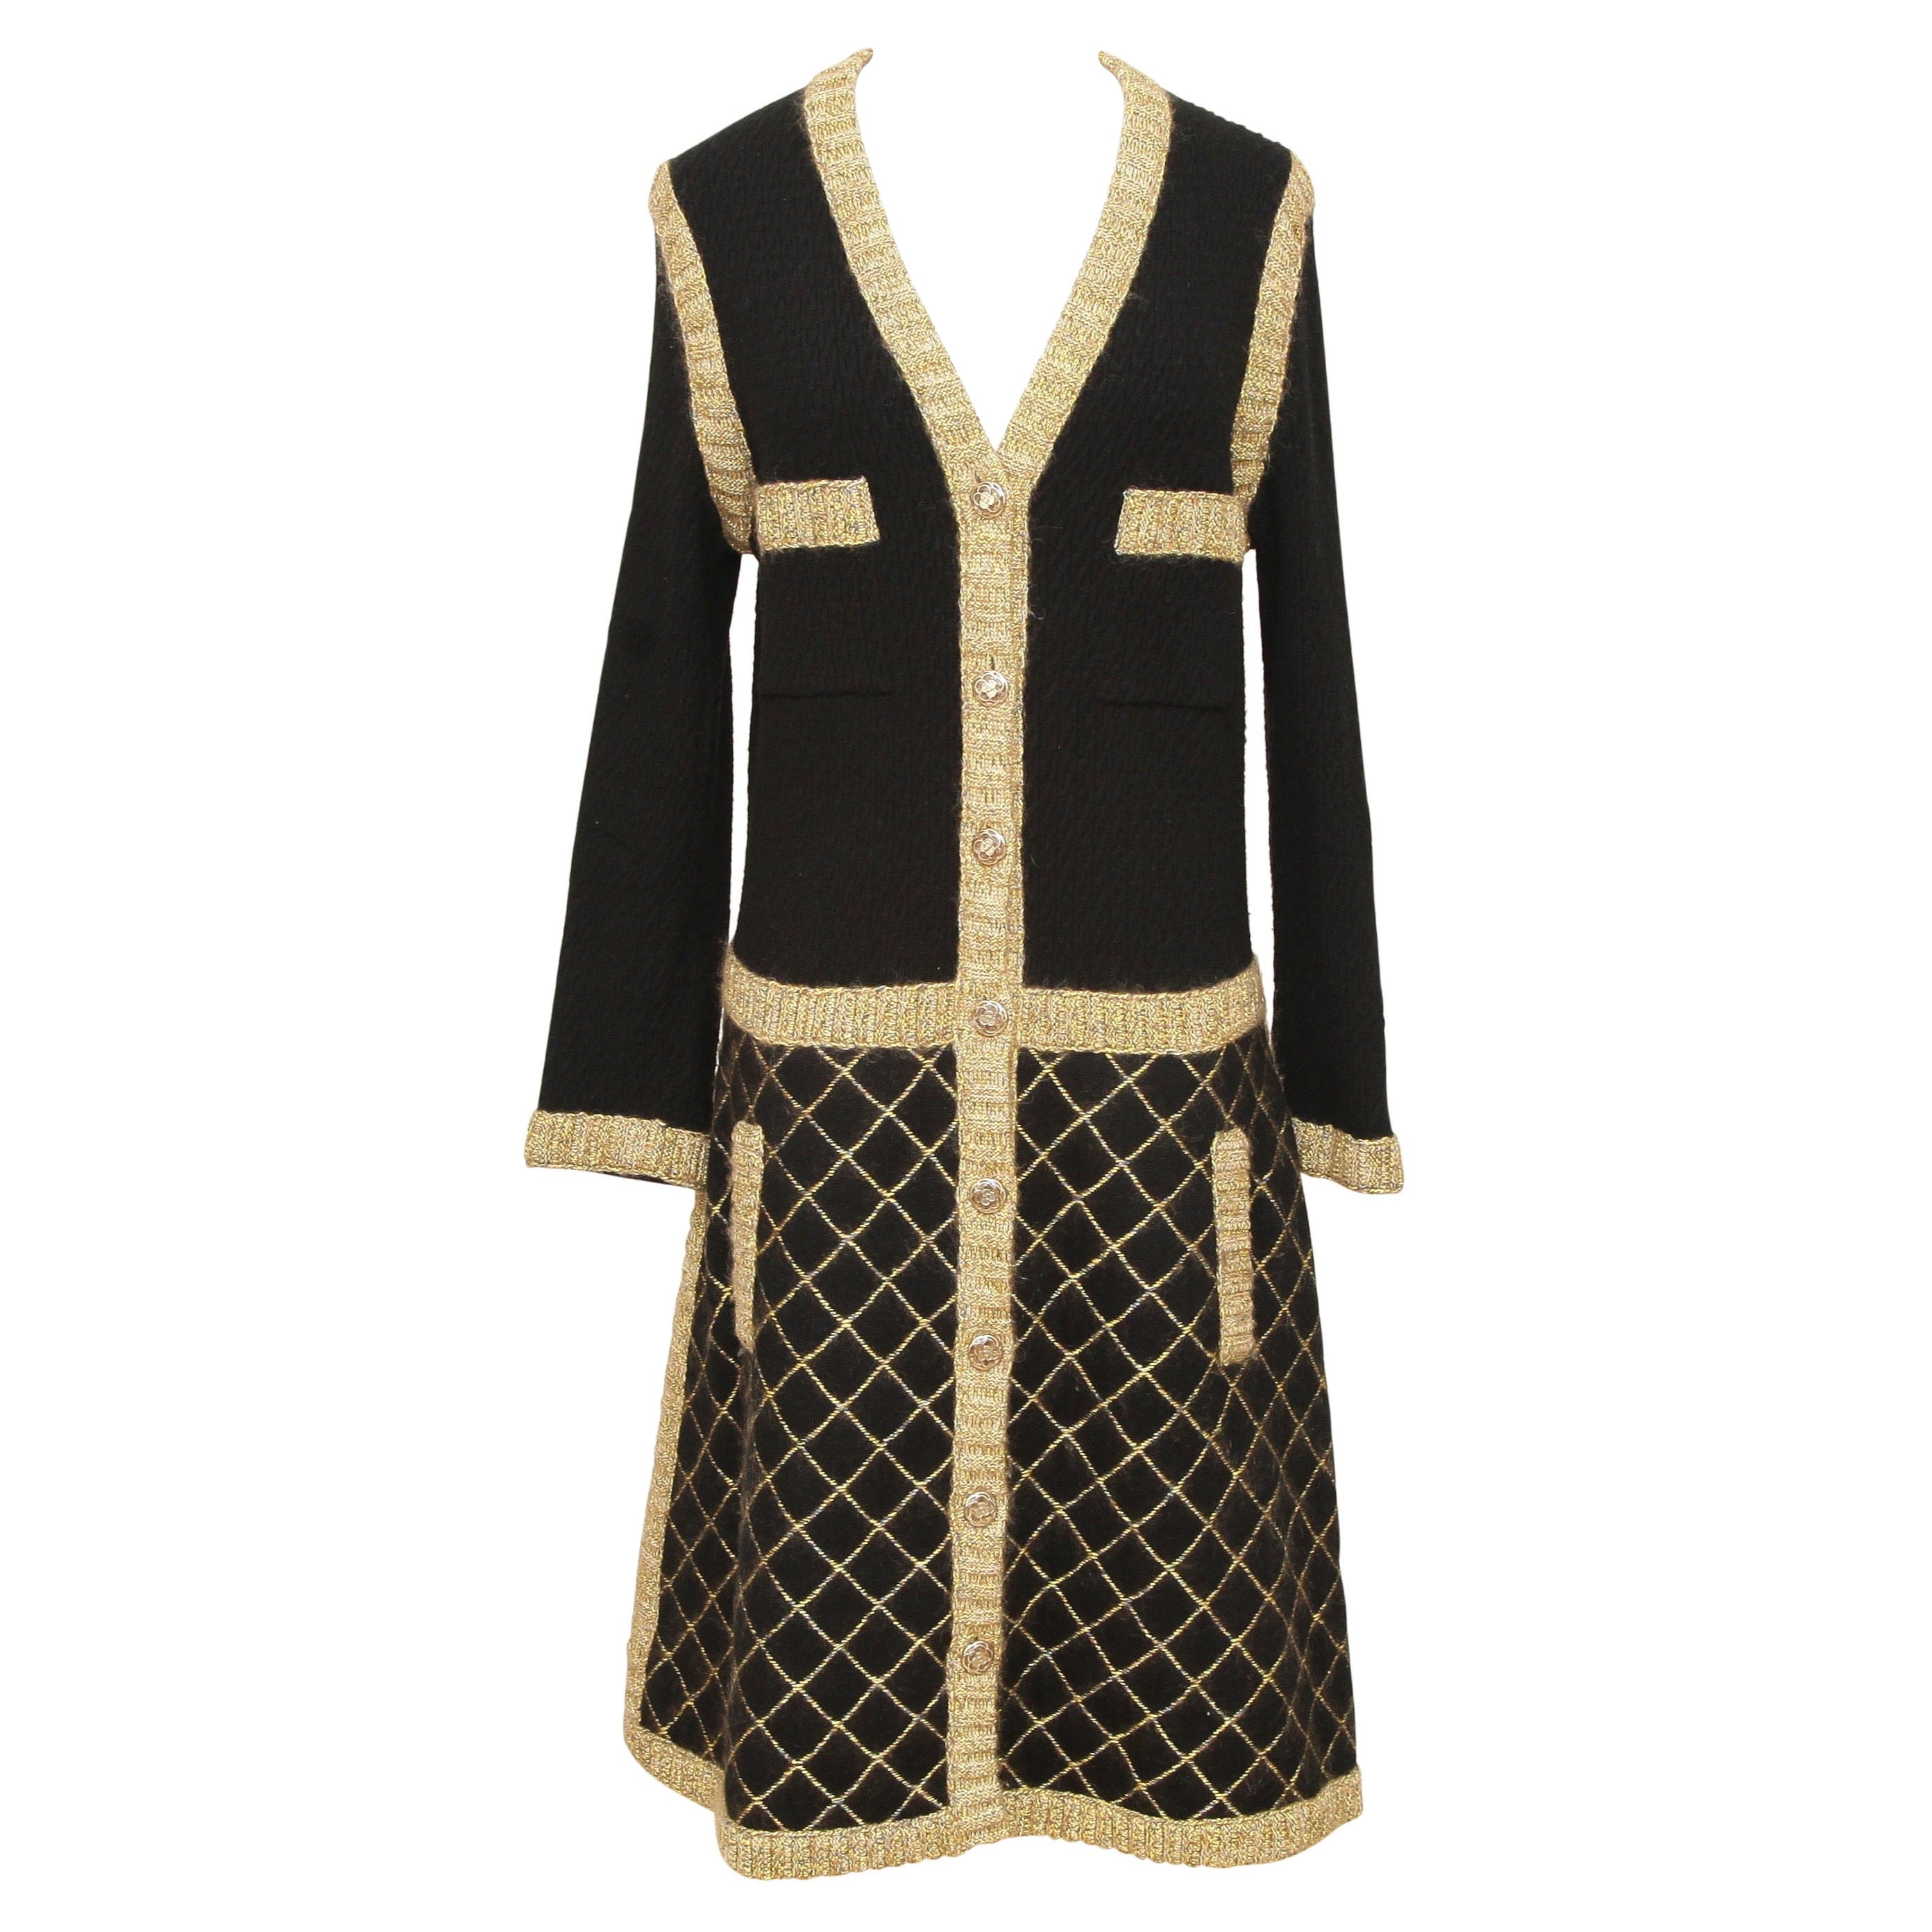 CHANEL Dress Knit Sweater Black Gold Camellia Long Sleeve Cashmere Sz 42 2015